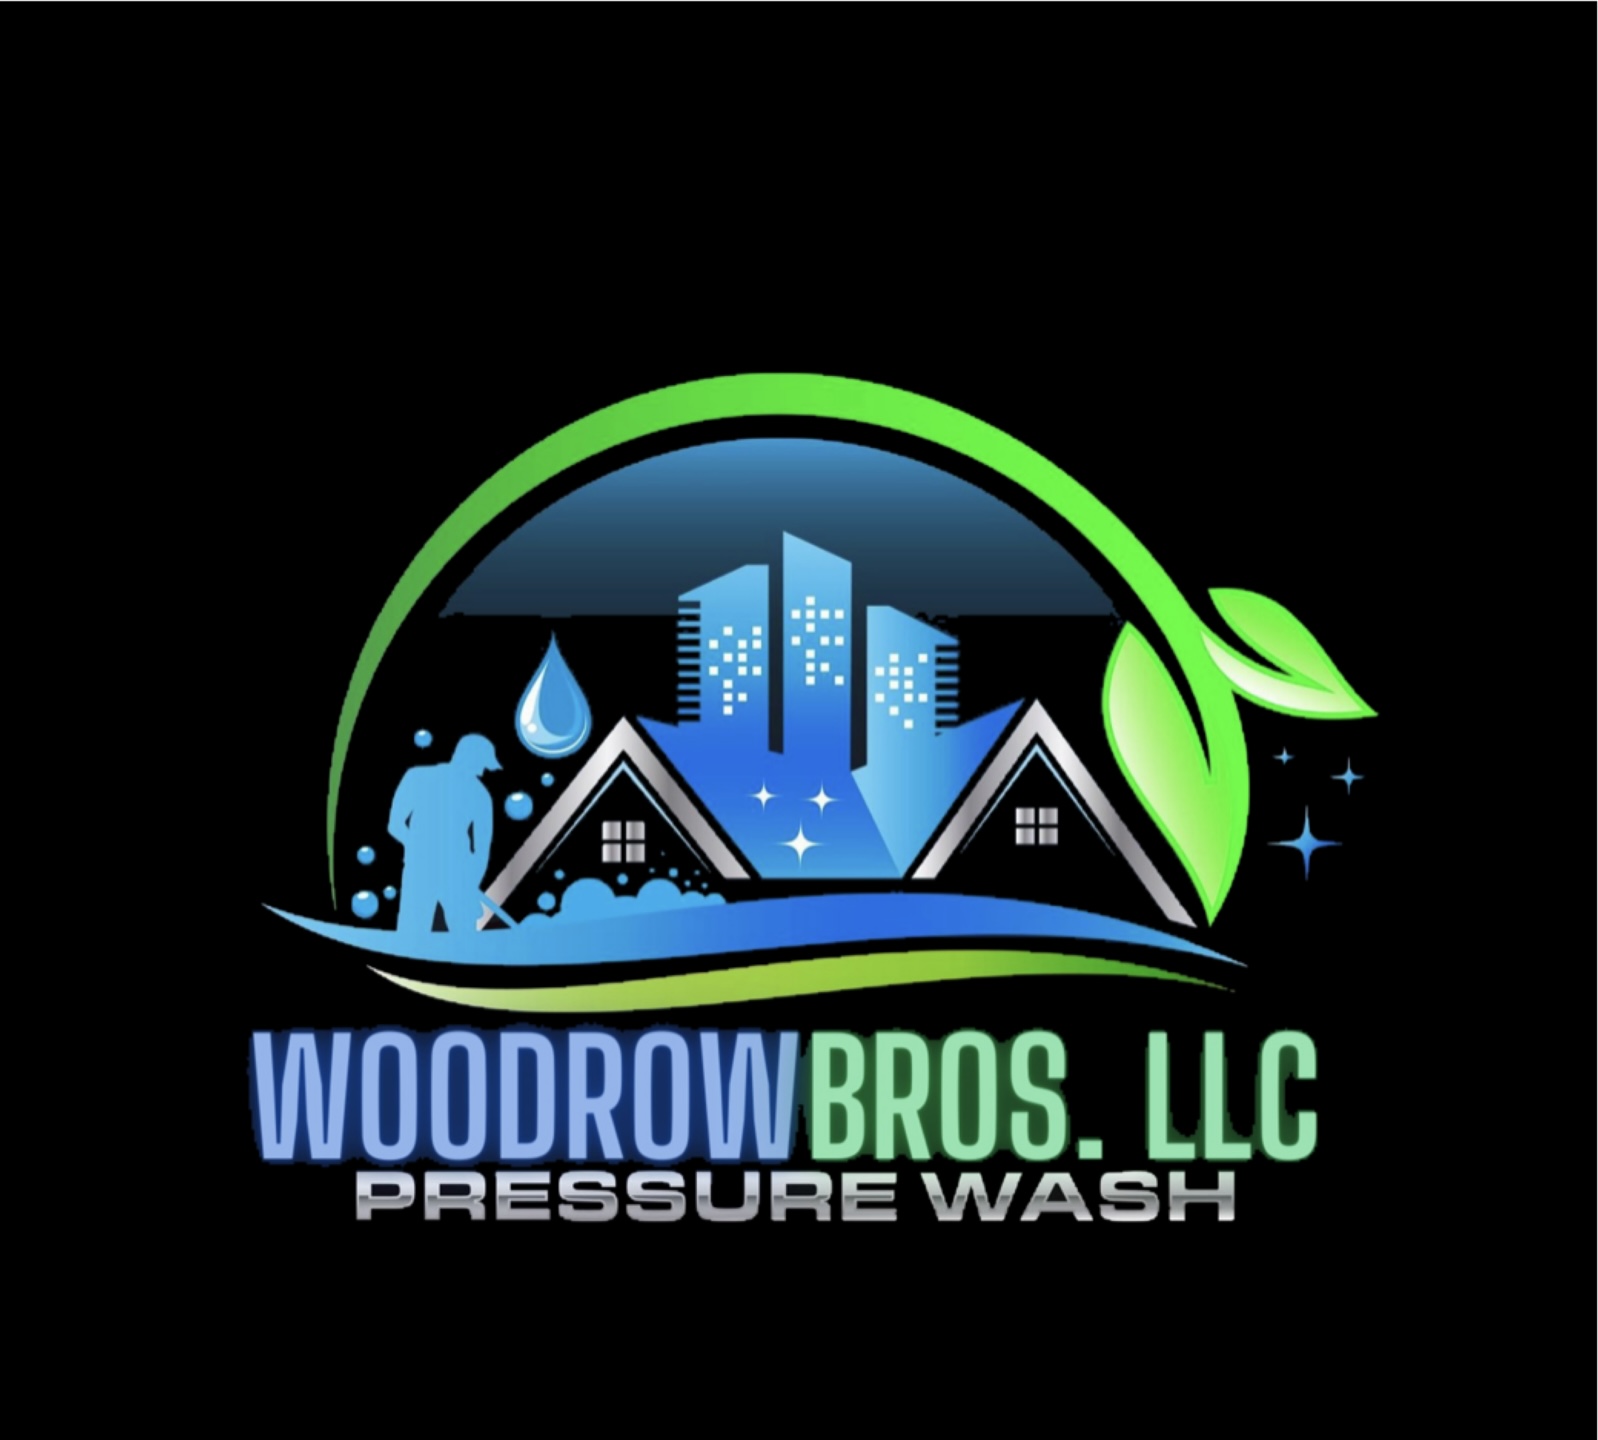 Woodrow Bros. LLC 1445 3rd St, Enola Pennsylvania 17025